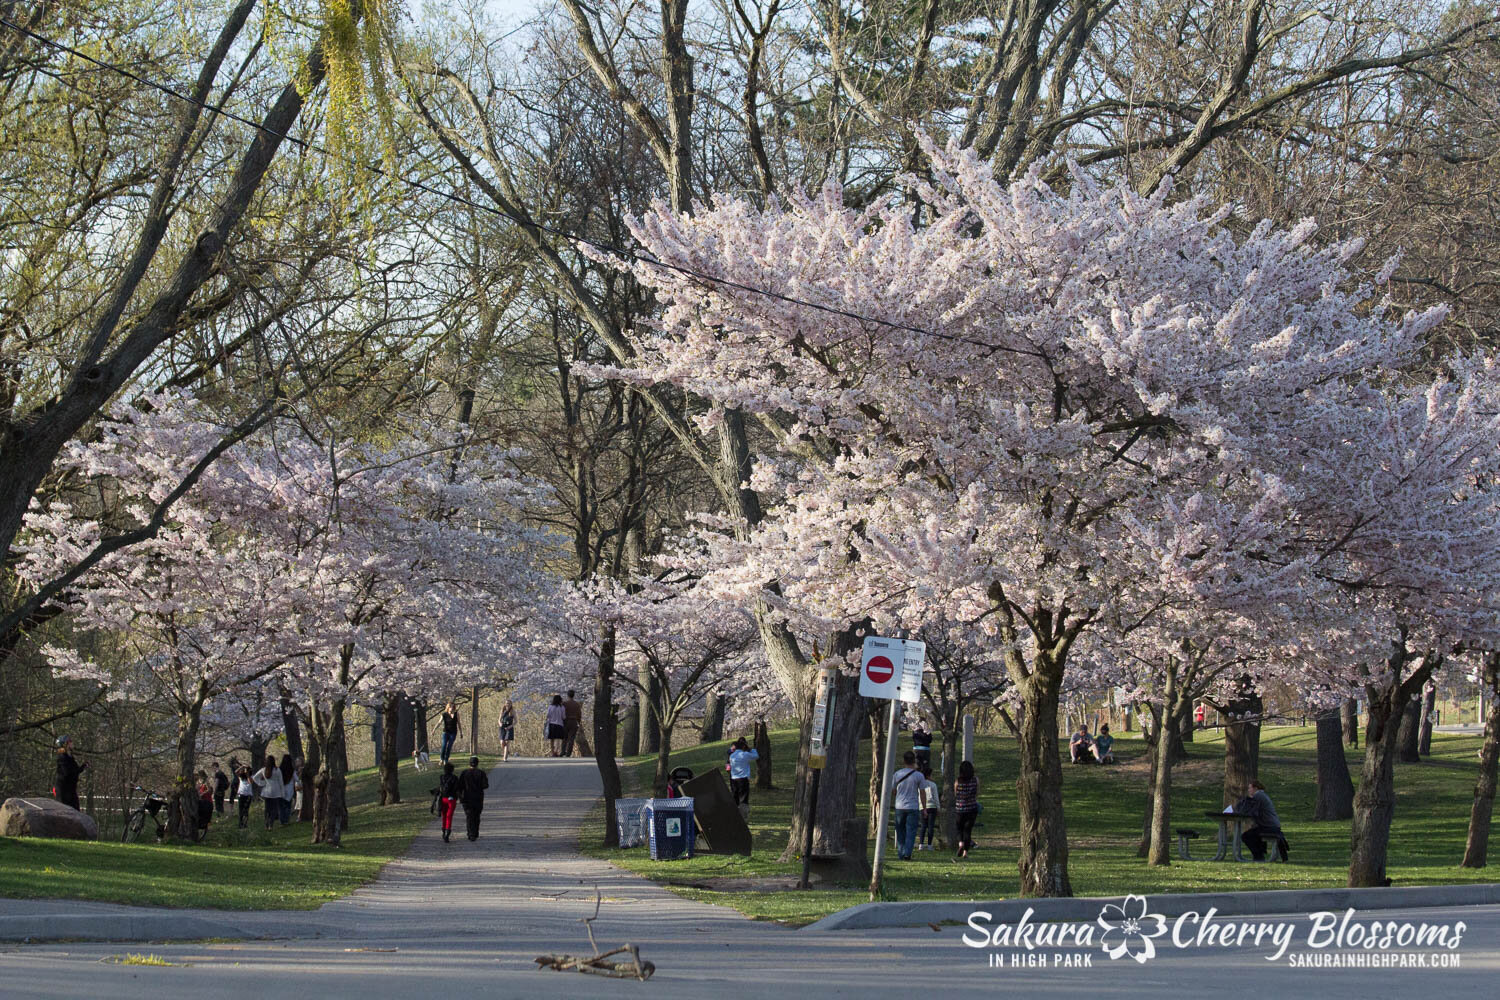  Sakura // Cherry Blossoms in High Park - April 16, 2012 - www.SakurainHighPark.com 